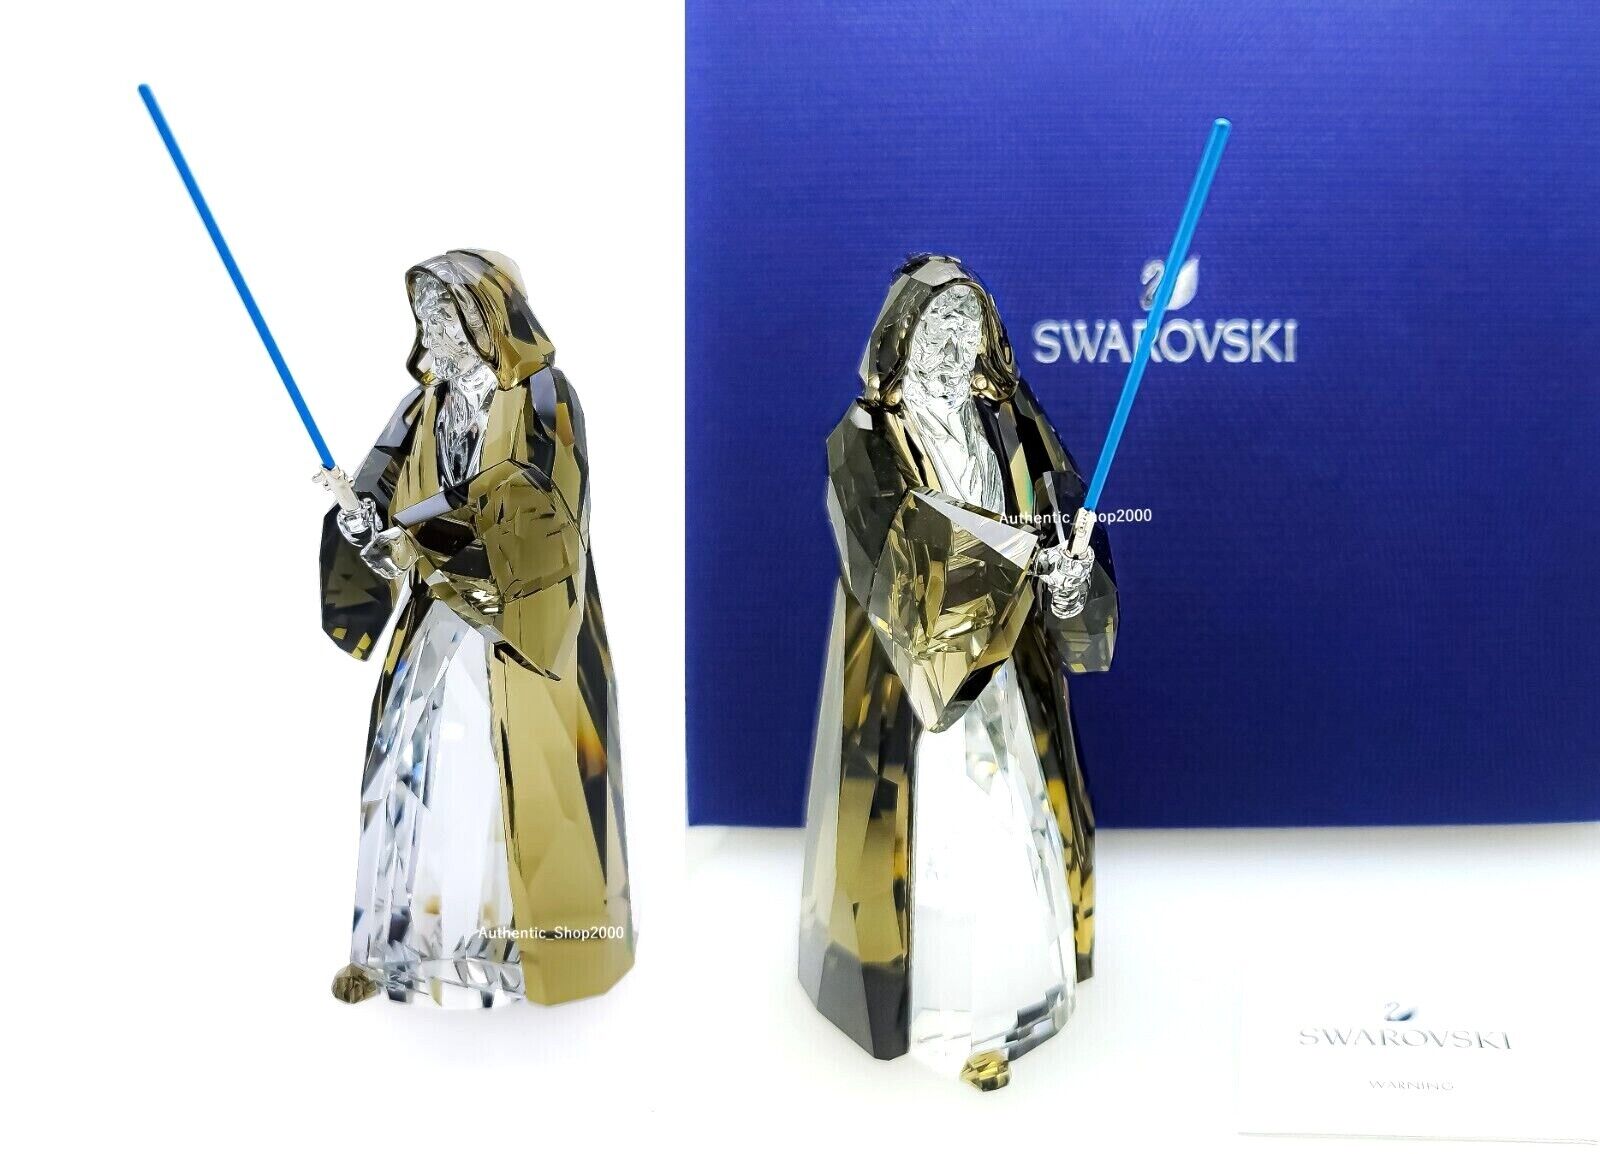  New 100% SWAROVSKI Crystals Star Wars Obi-Wan Kenobi Figurine Display 5619211